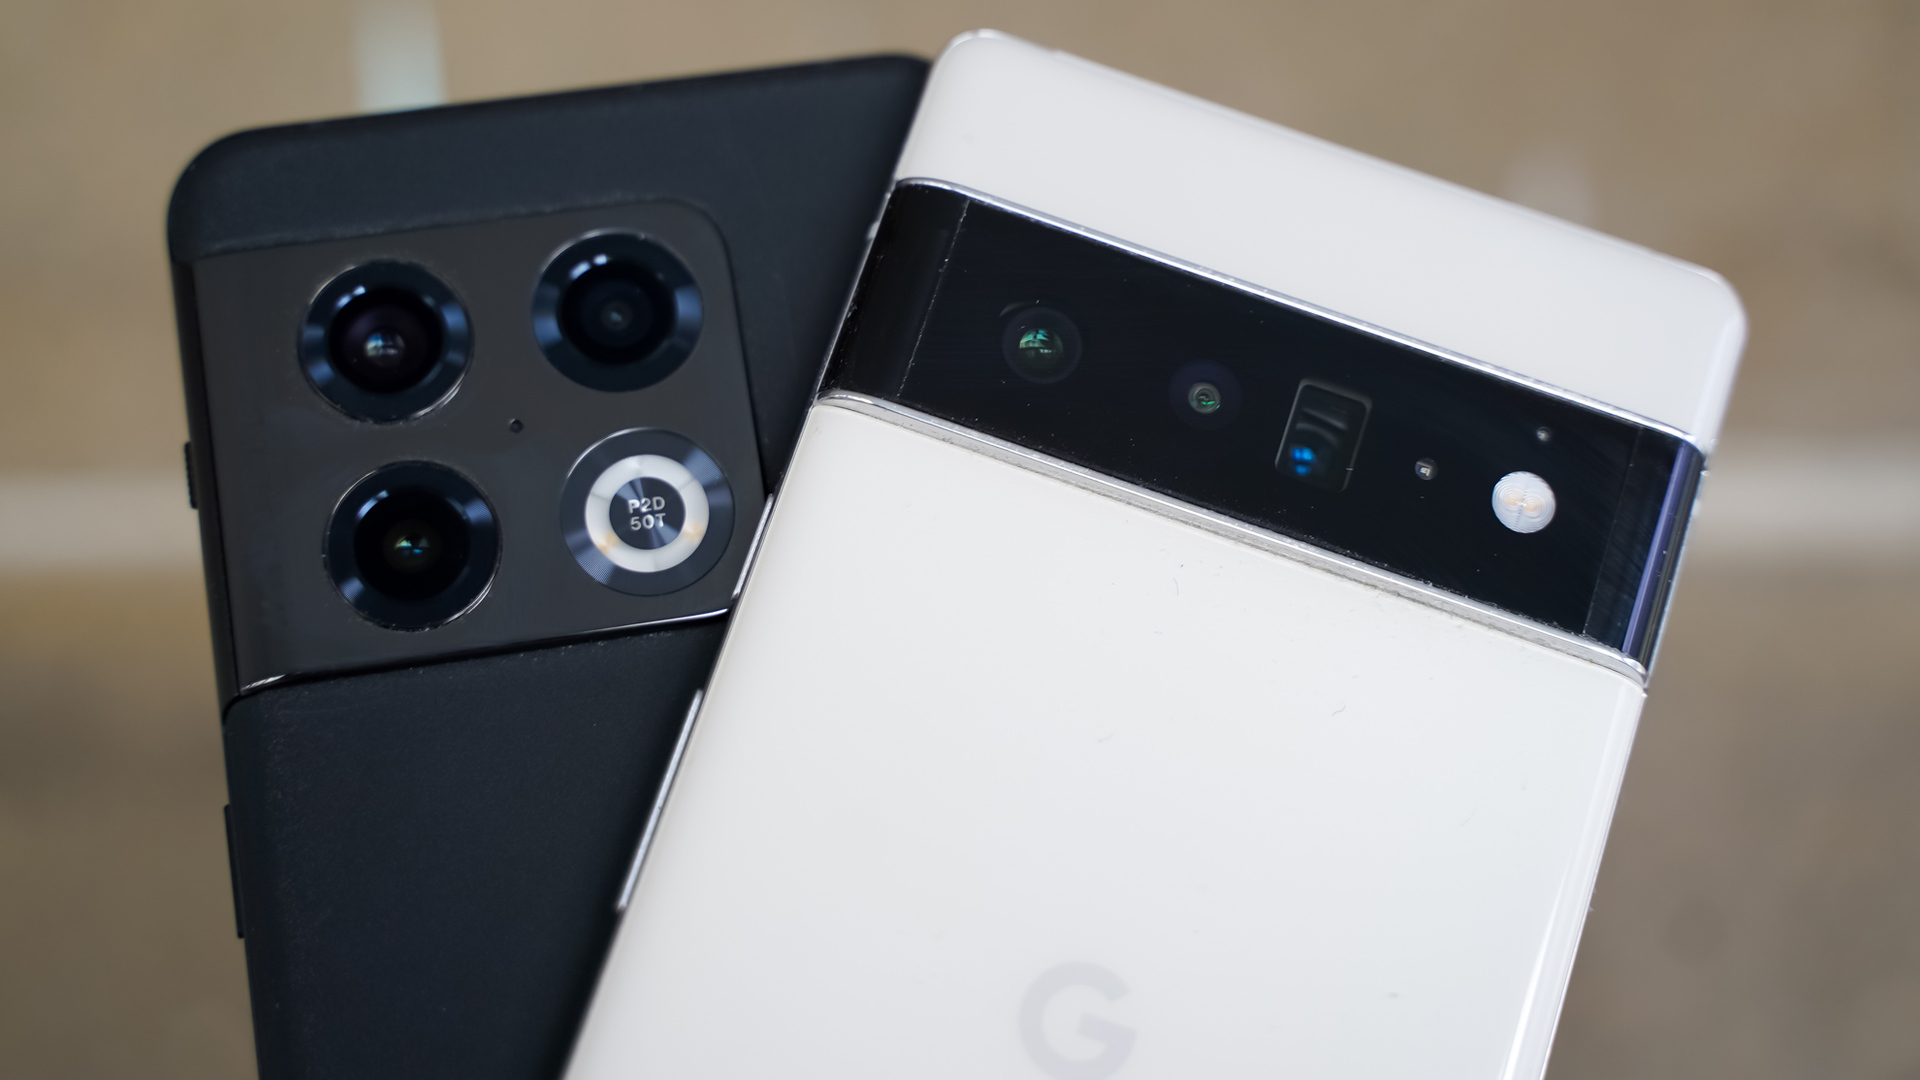 OnePlus 10 Pro vs Google Pixel 6 Pro cameras in front of brick